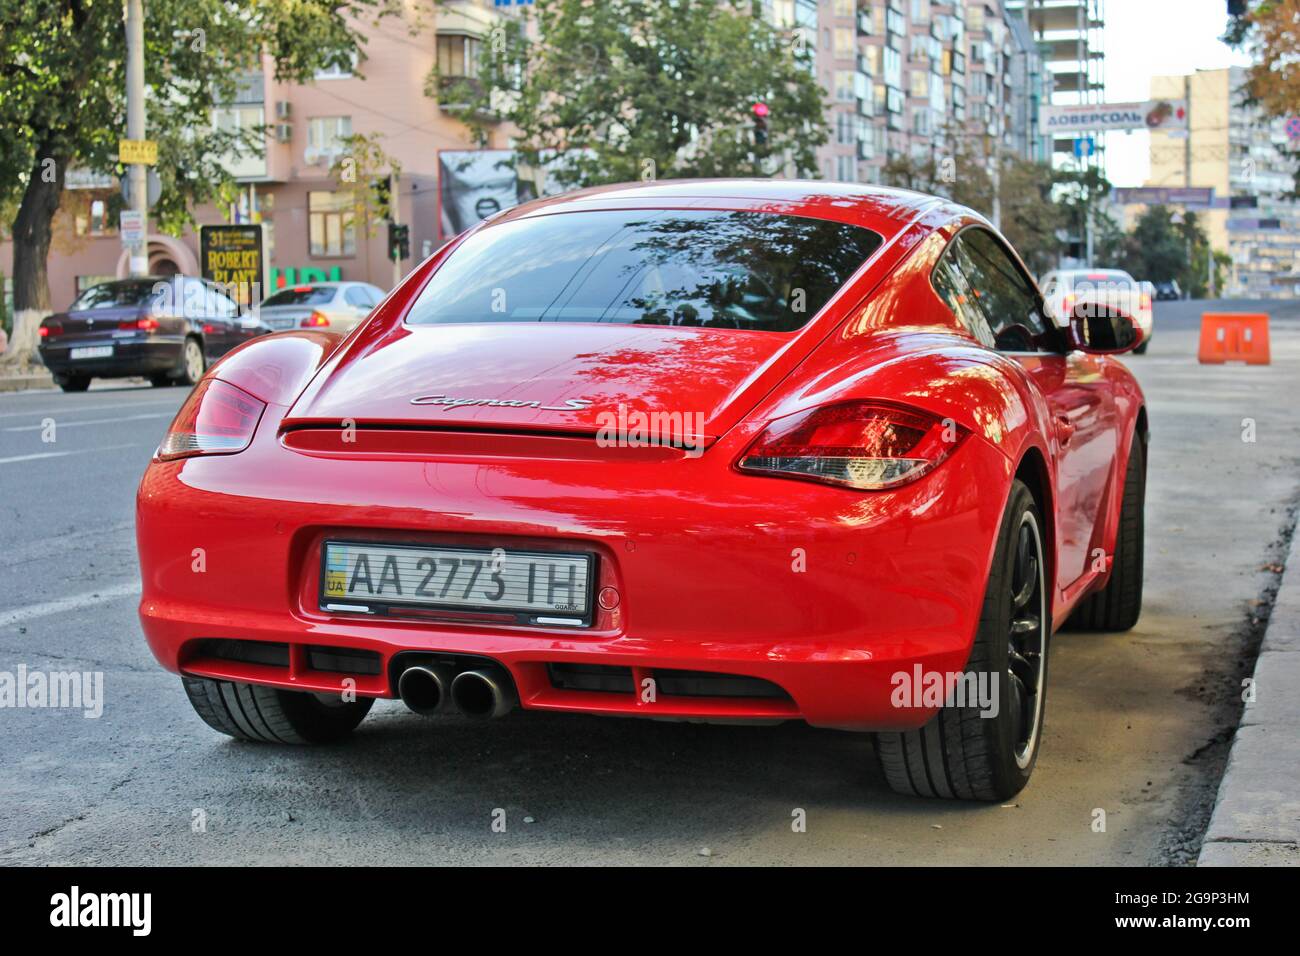 Kiev, Ukraine - July 3, 2013: Red Porsche Cayman S parked in the city Stock Photo